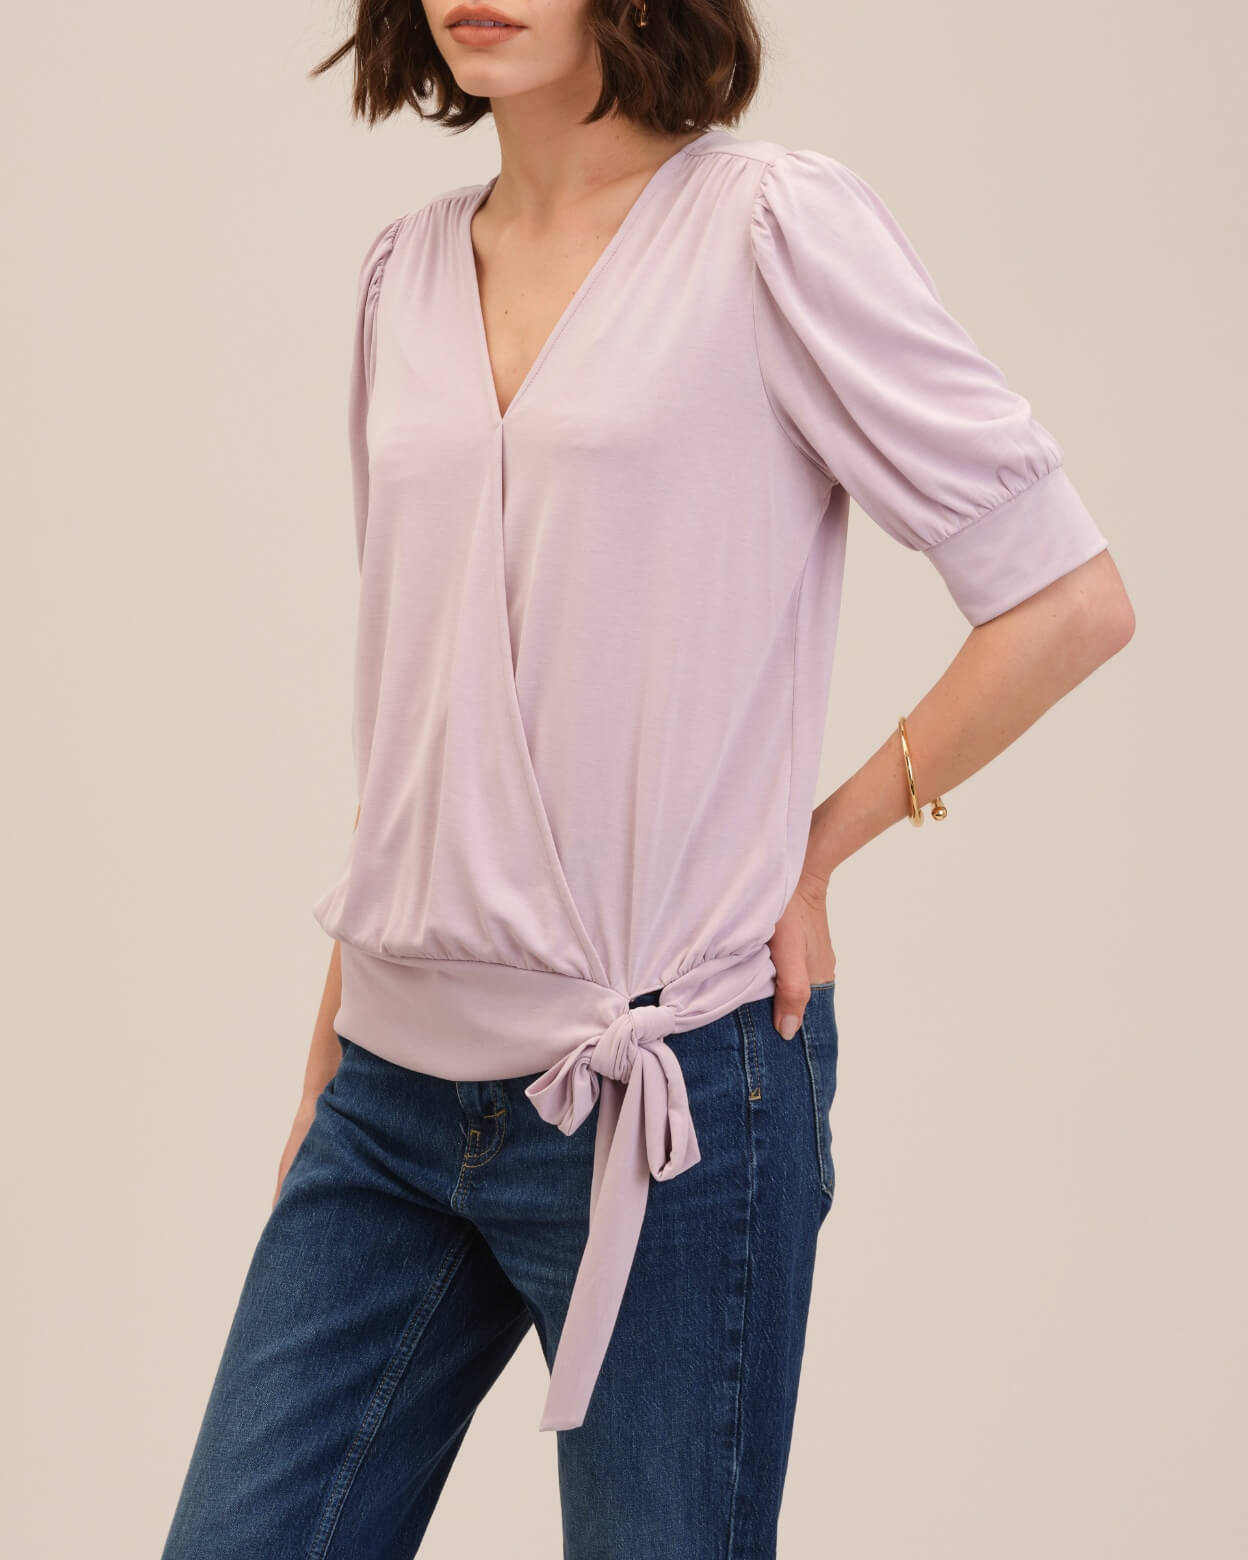 Shop Elbow Sleeve Wrap V-Neck Top | Catherine Malandrino | JANE + MERCER